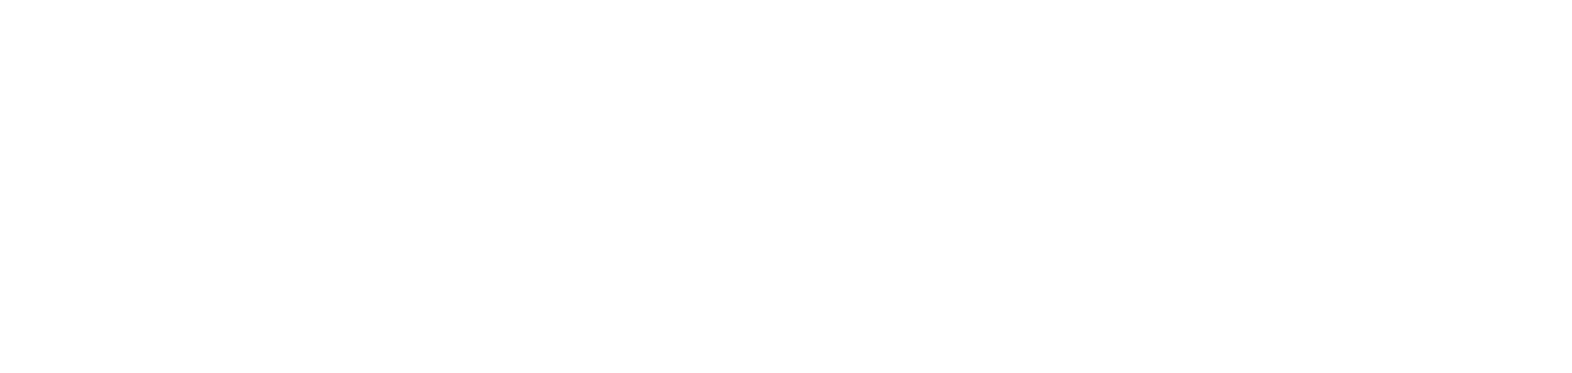 Electra Meccanica logo large for dark backgrounds (transparent PNG)